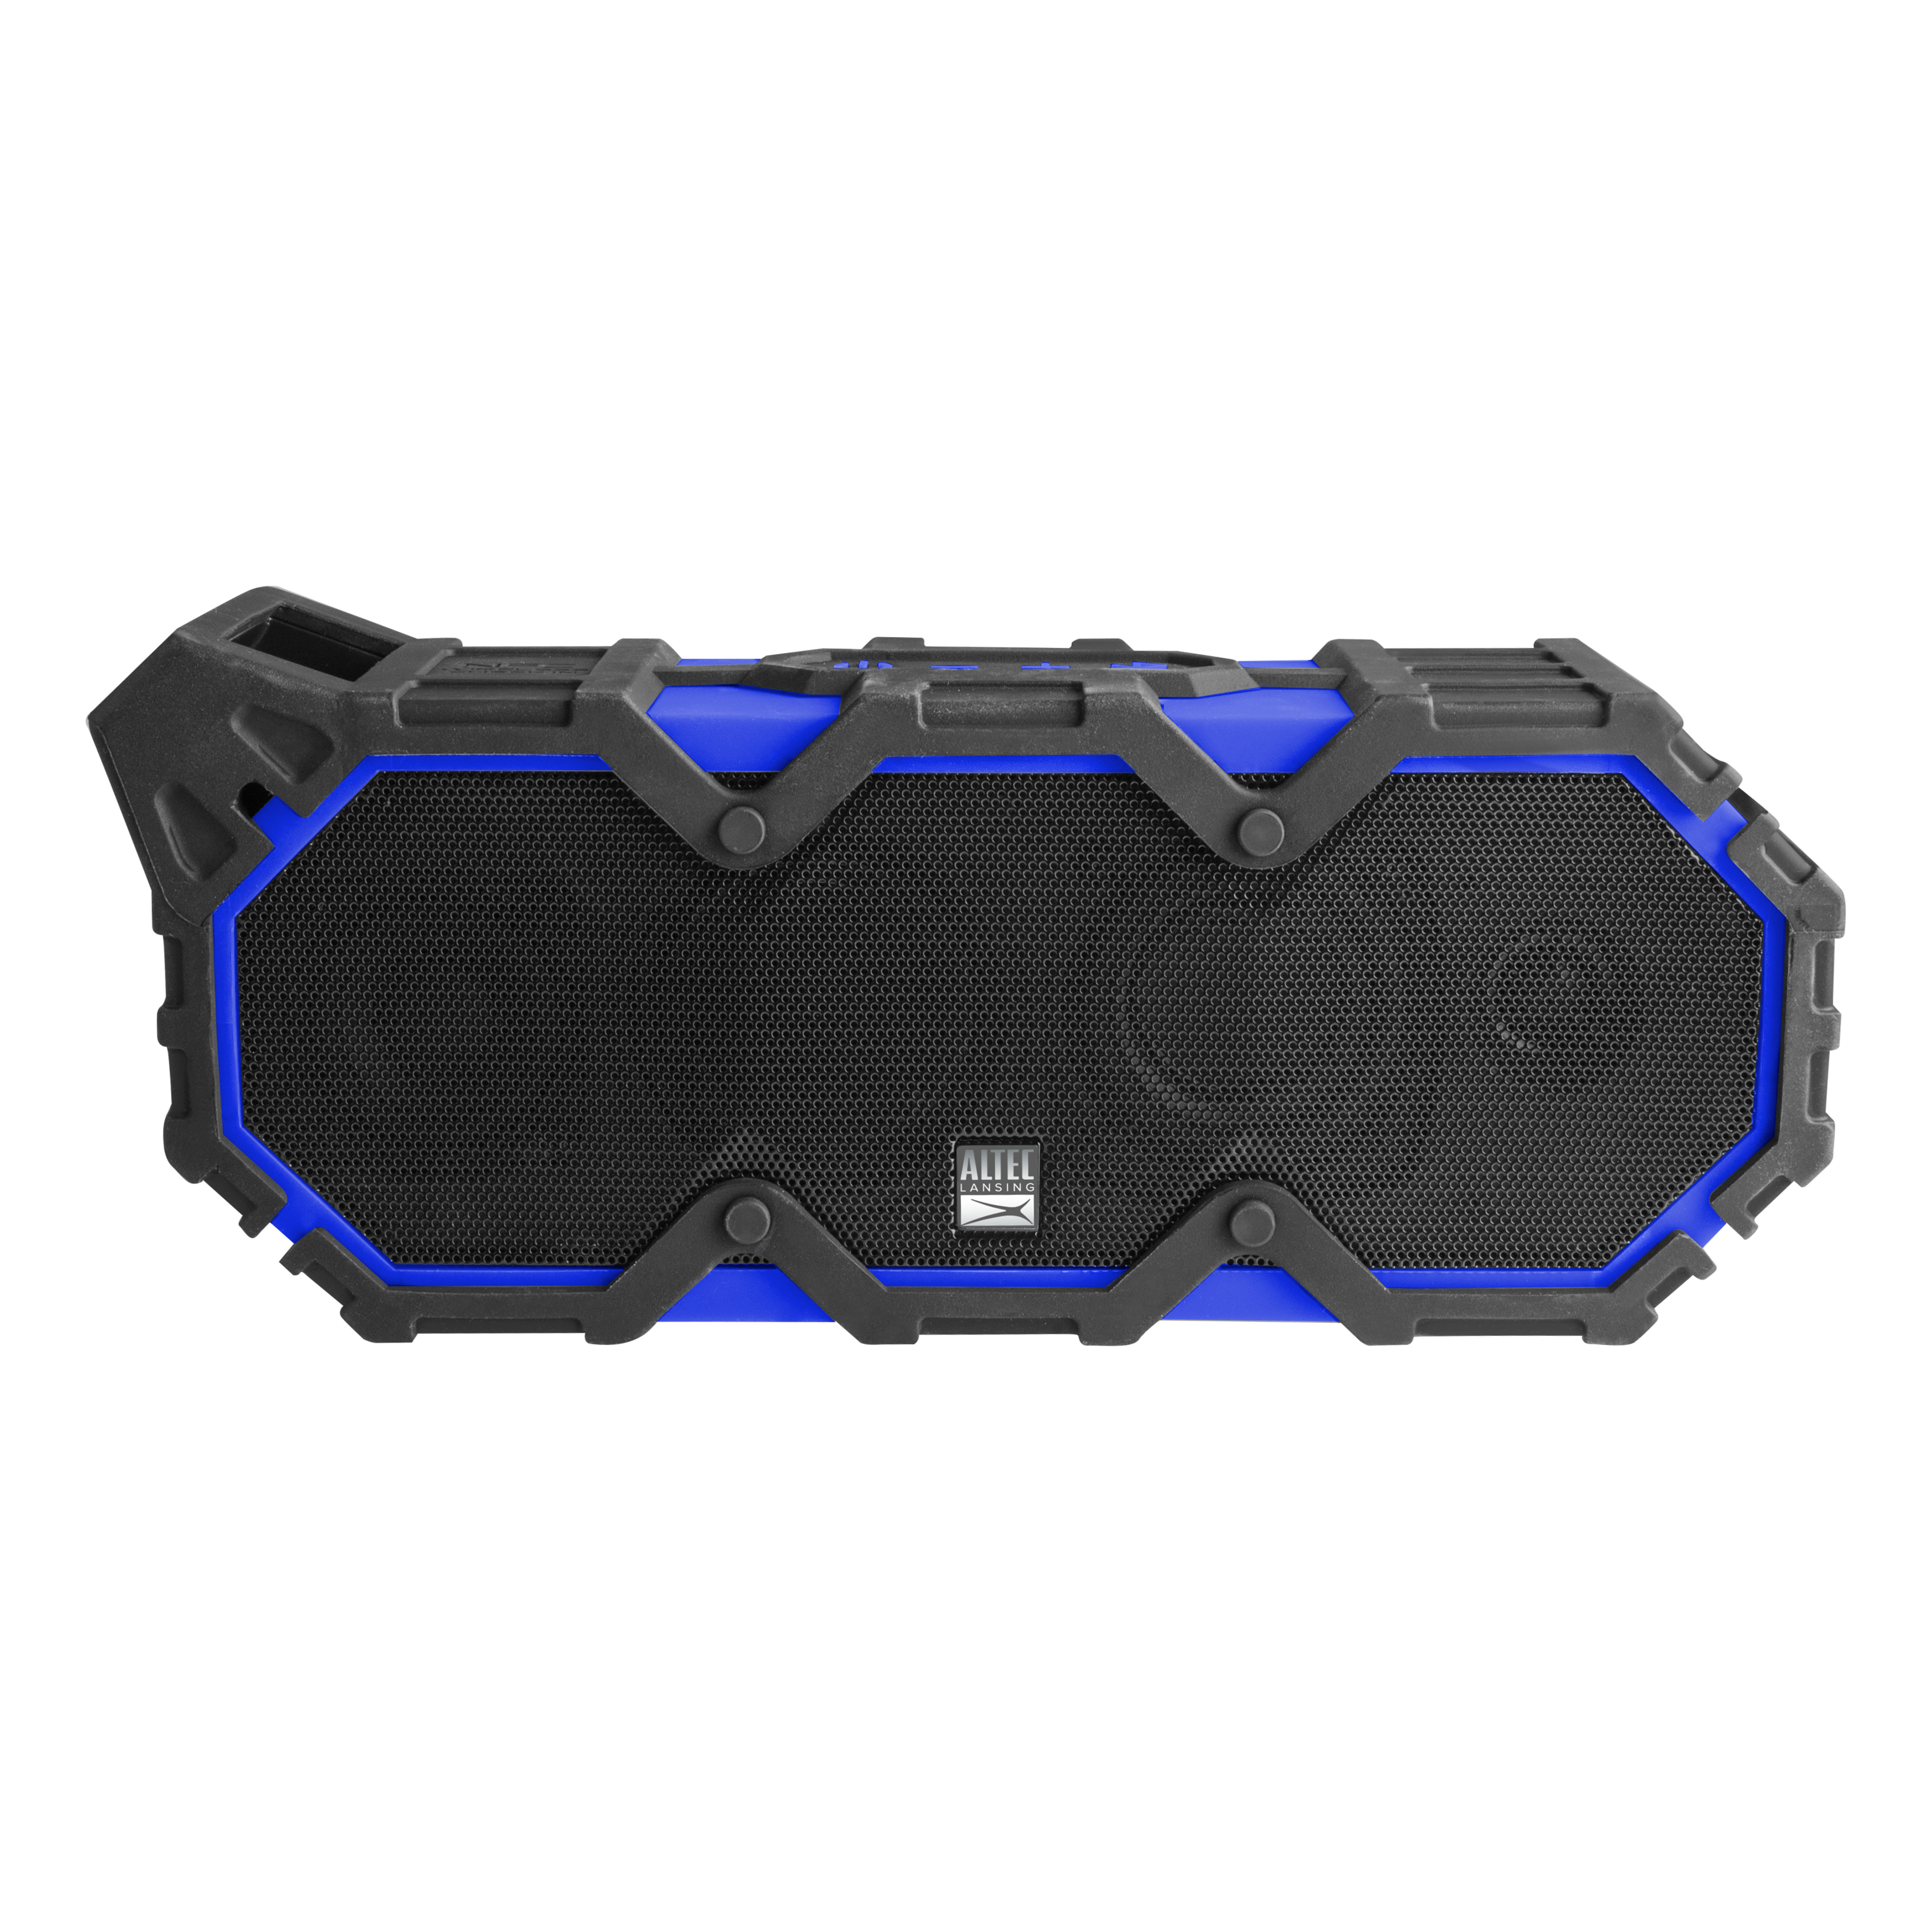 Altec Lansing Portable Bluetooth Speaker, Black, IMW789-WM - image 1 of 6